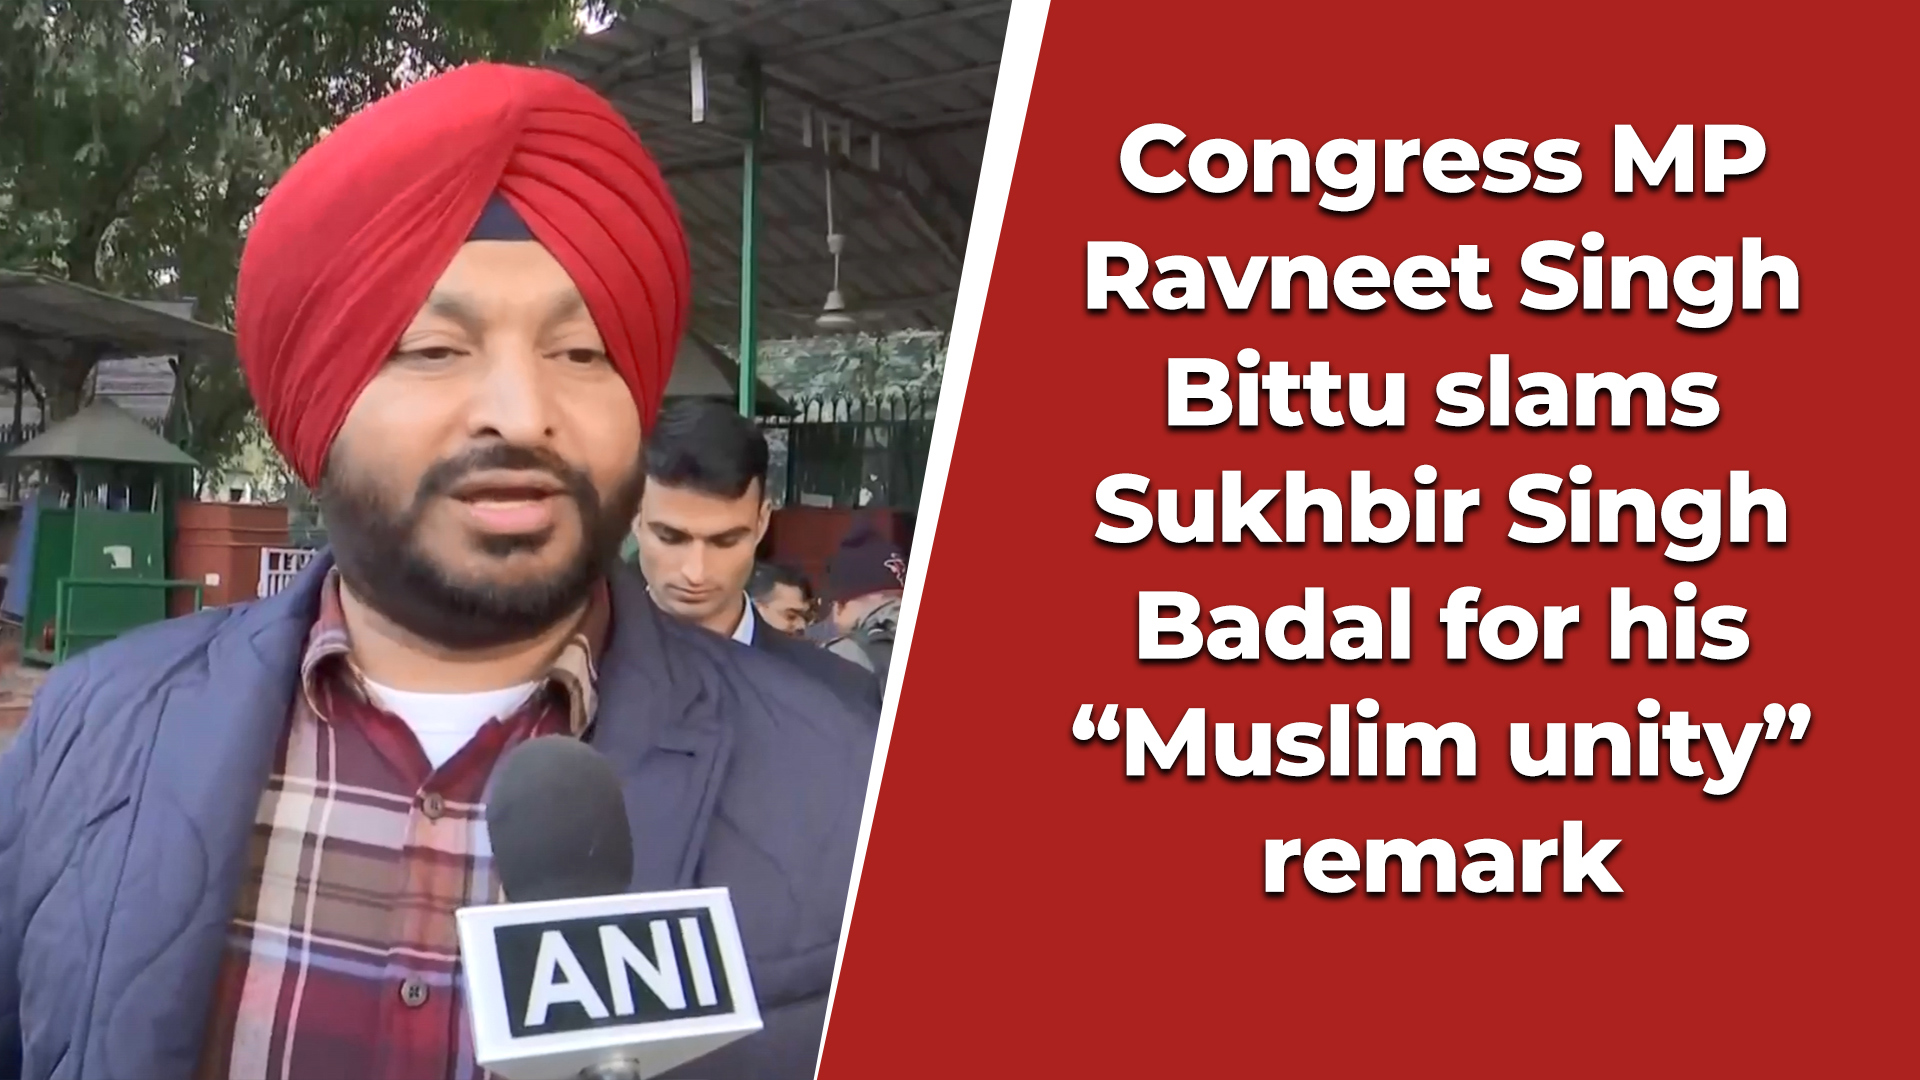 Congress Mp Ravneet Singh Bittu Slams Sukhbir Singh Badal For His “muslim Unity” Remark